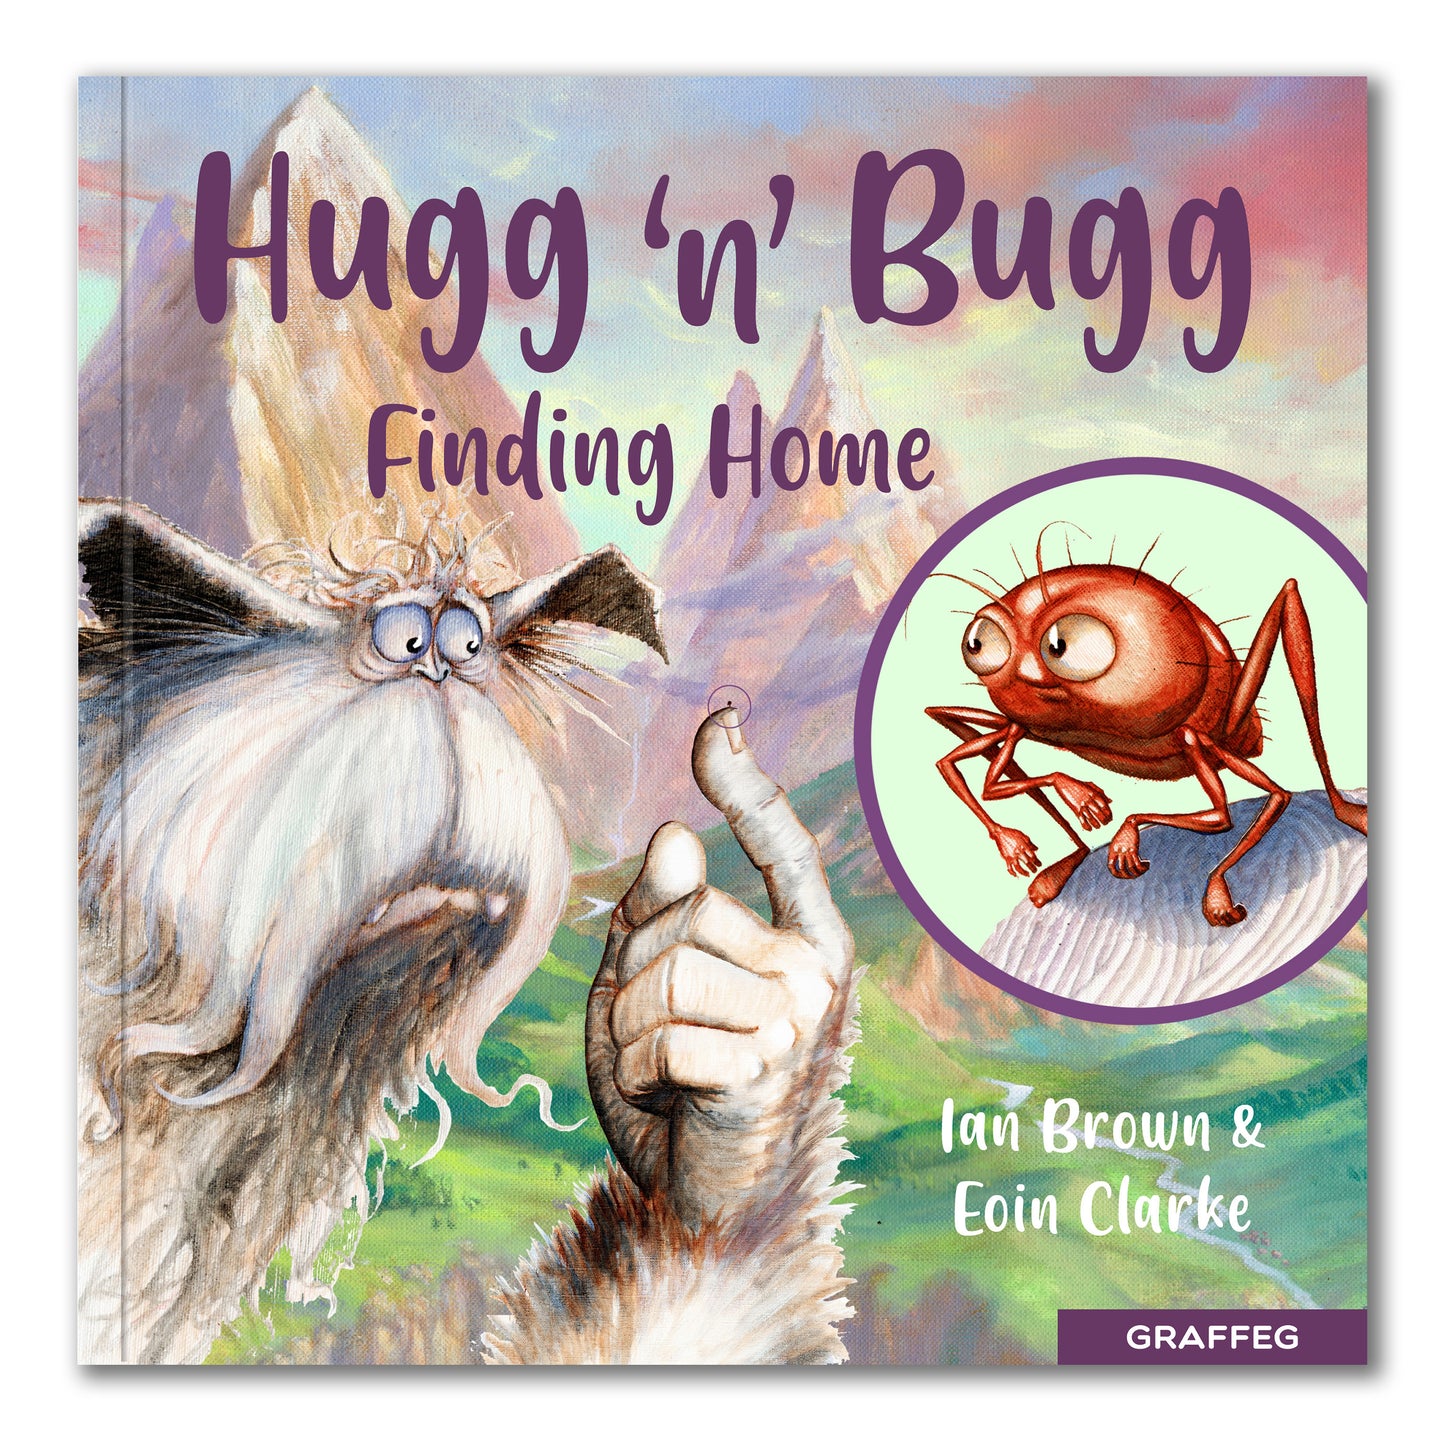 Hugg 'n' Bugg: Finding Home